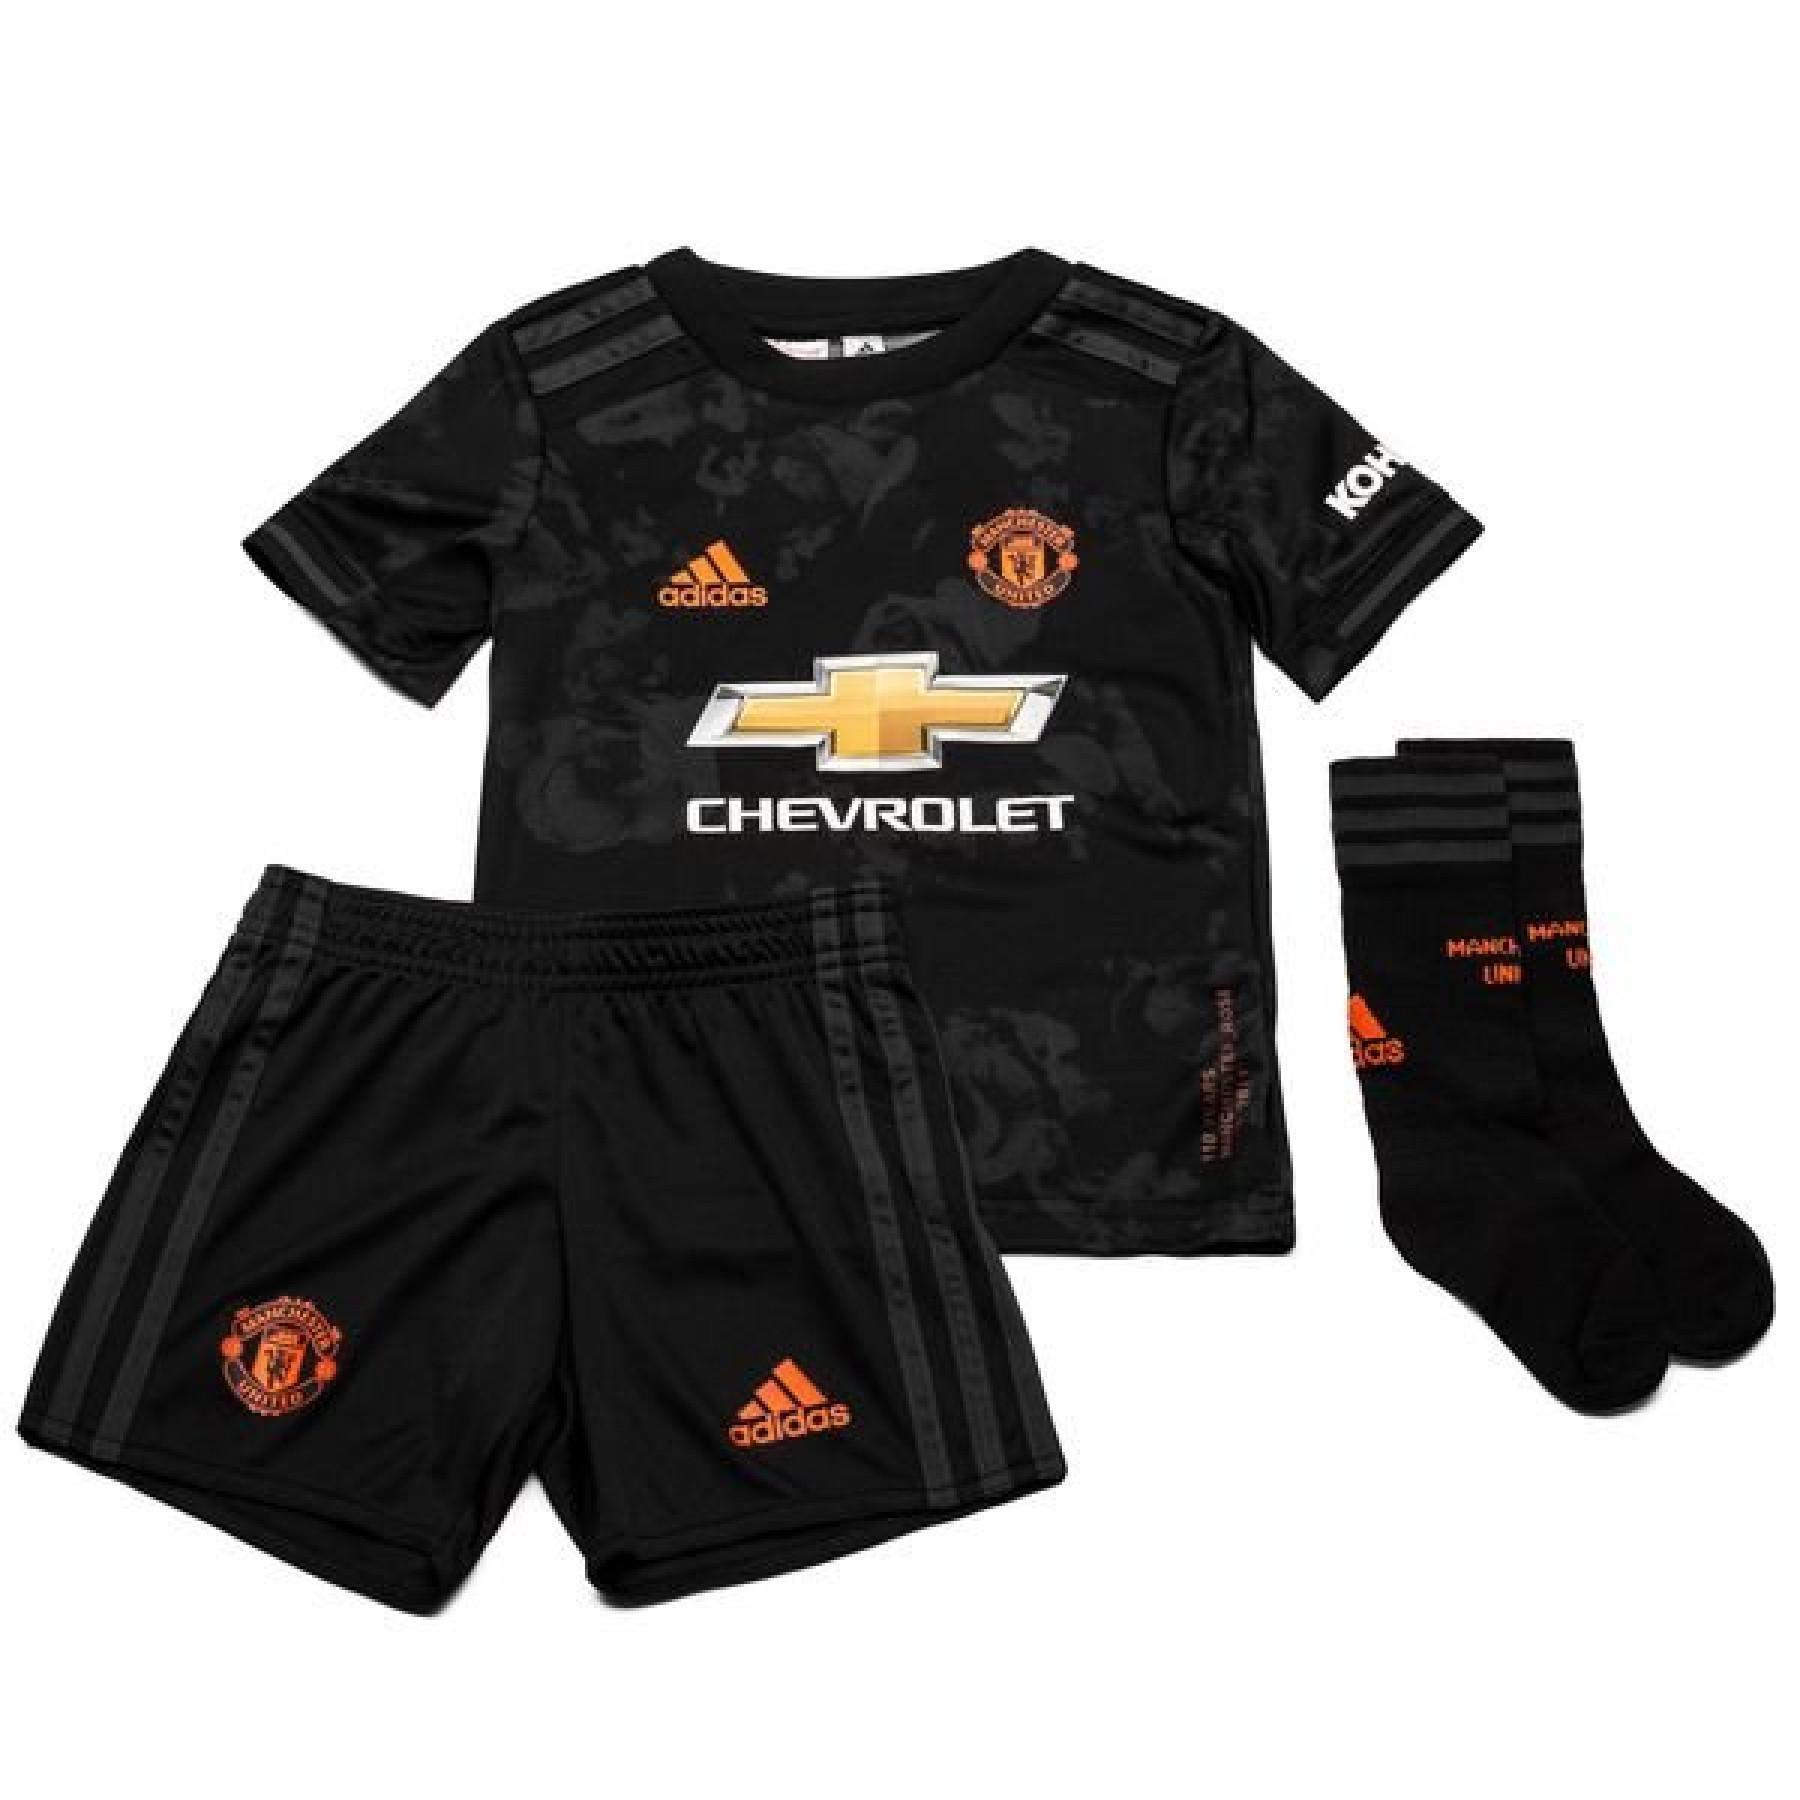 Mini-kit tercero Manchester United 2019/20